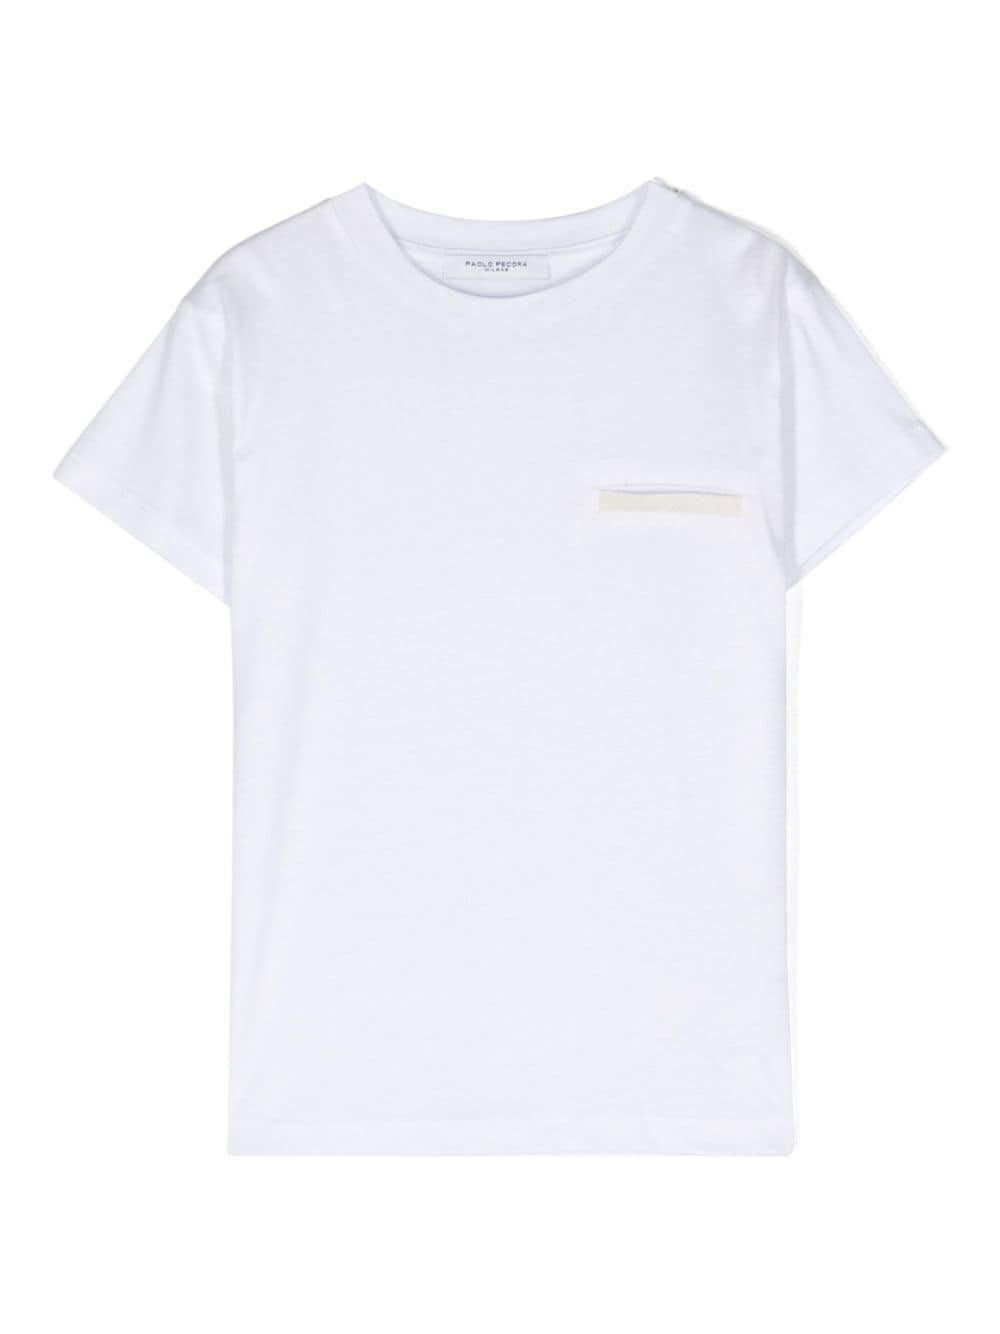 paolo pecora kids t-shirt en coton à col rond - blanc